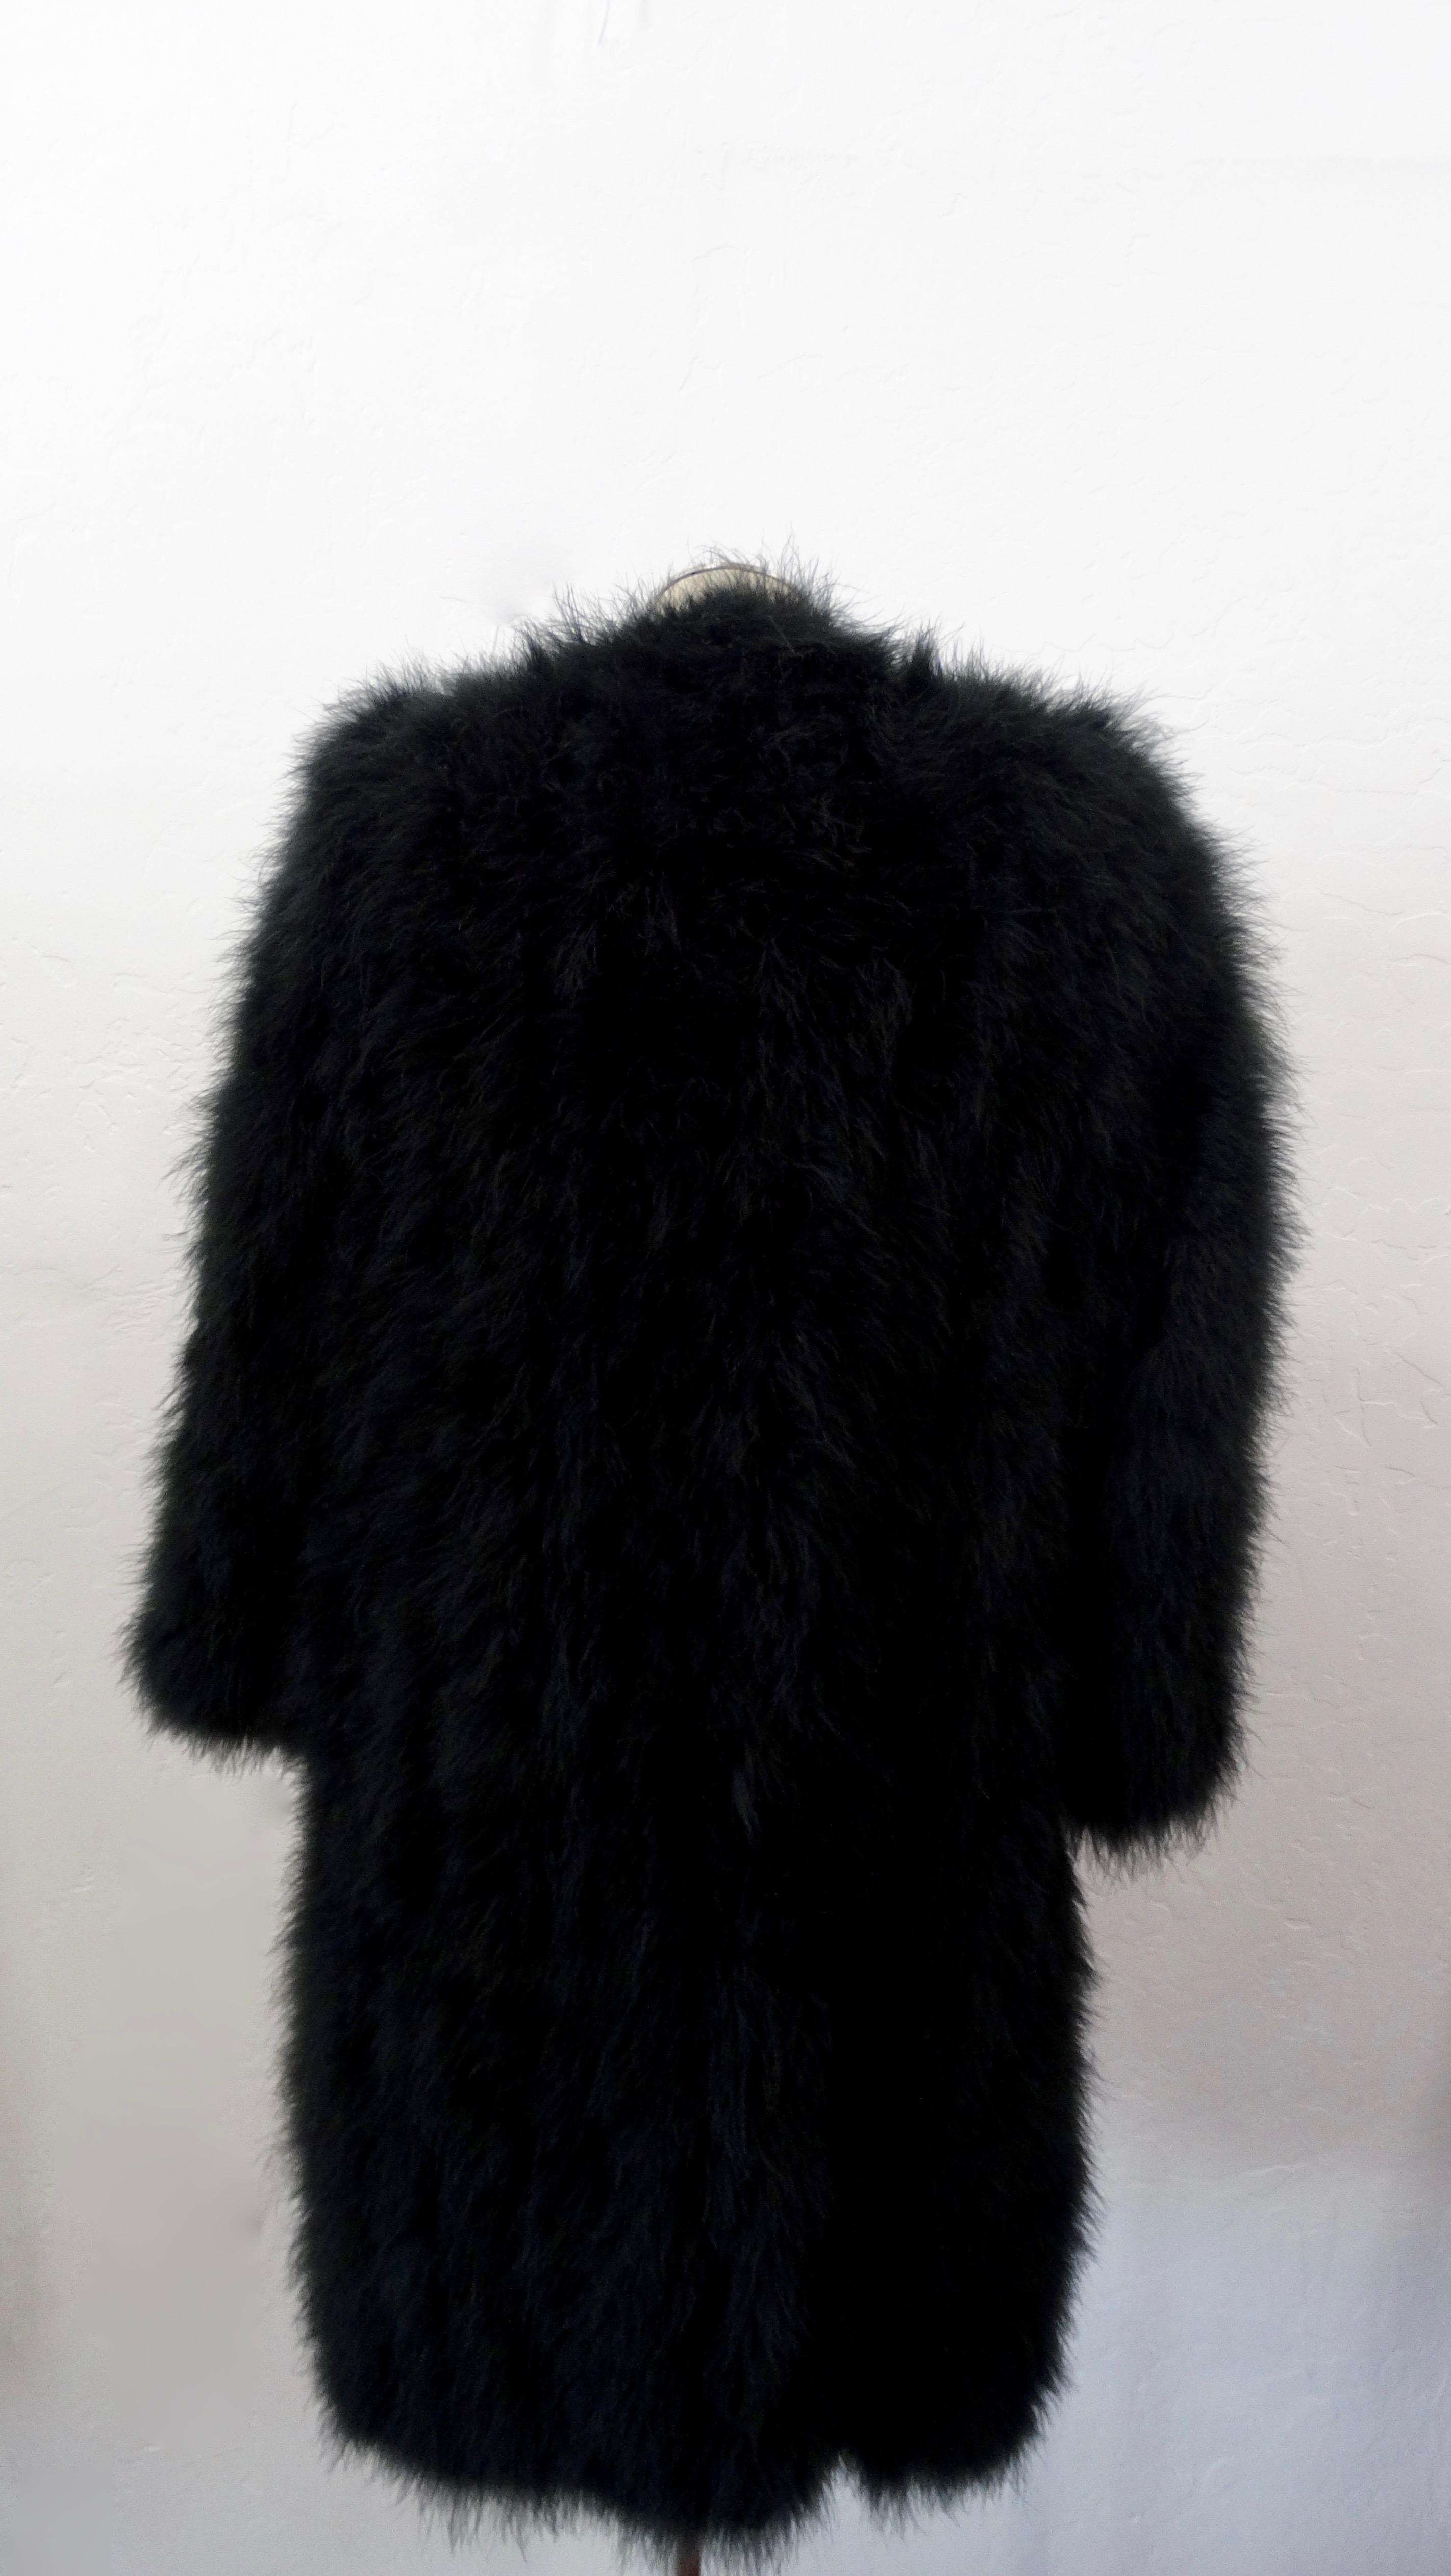 Sonia Rykiel 1980s Black Marabou Feather Coat 1